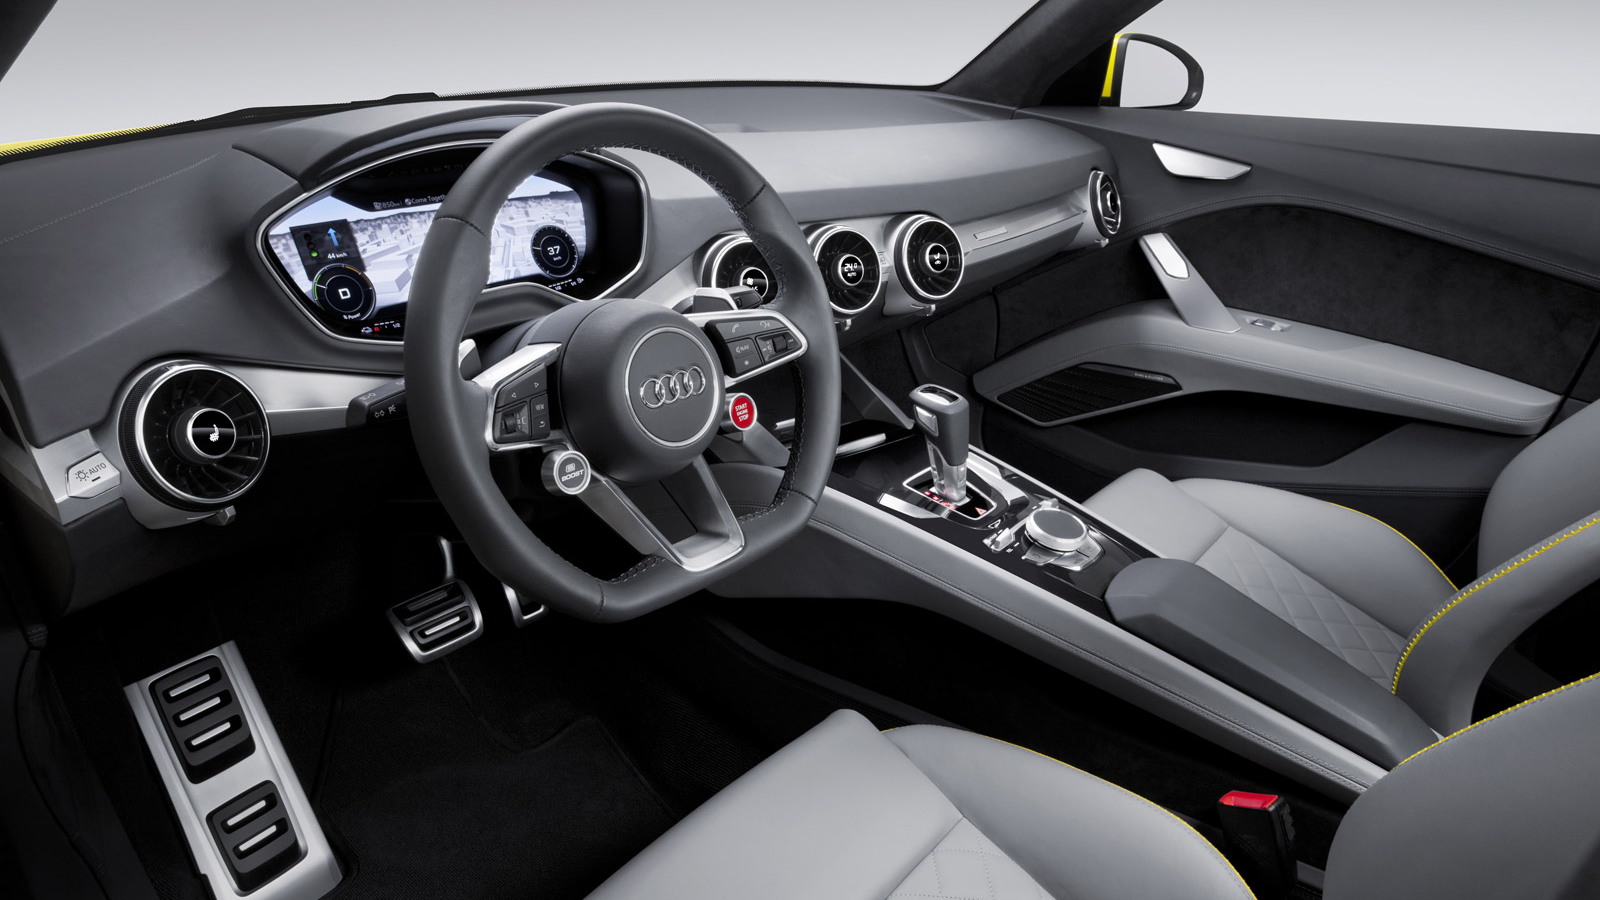 Audi TT Offroad Concept: Plug-In Hybrid Crossover In Beijing Debut